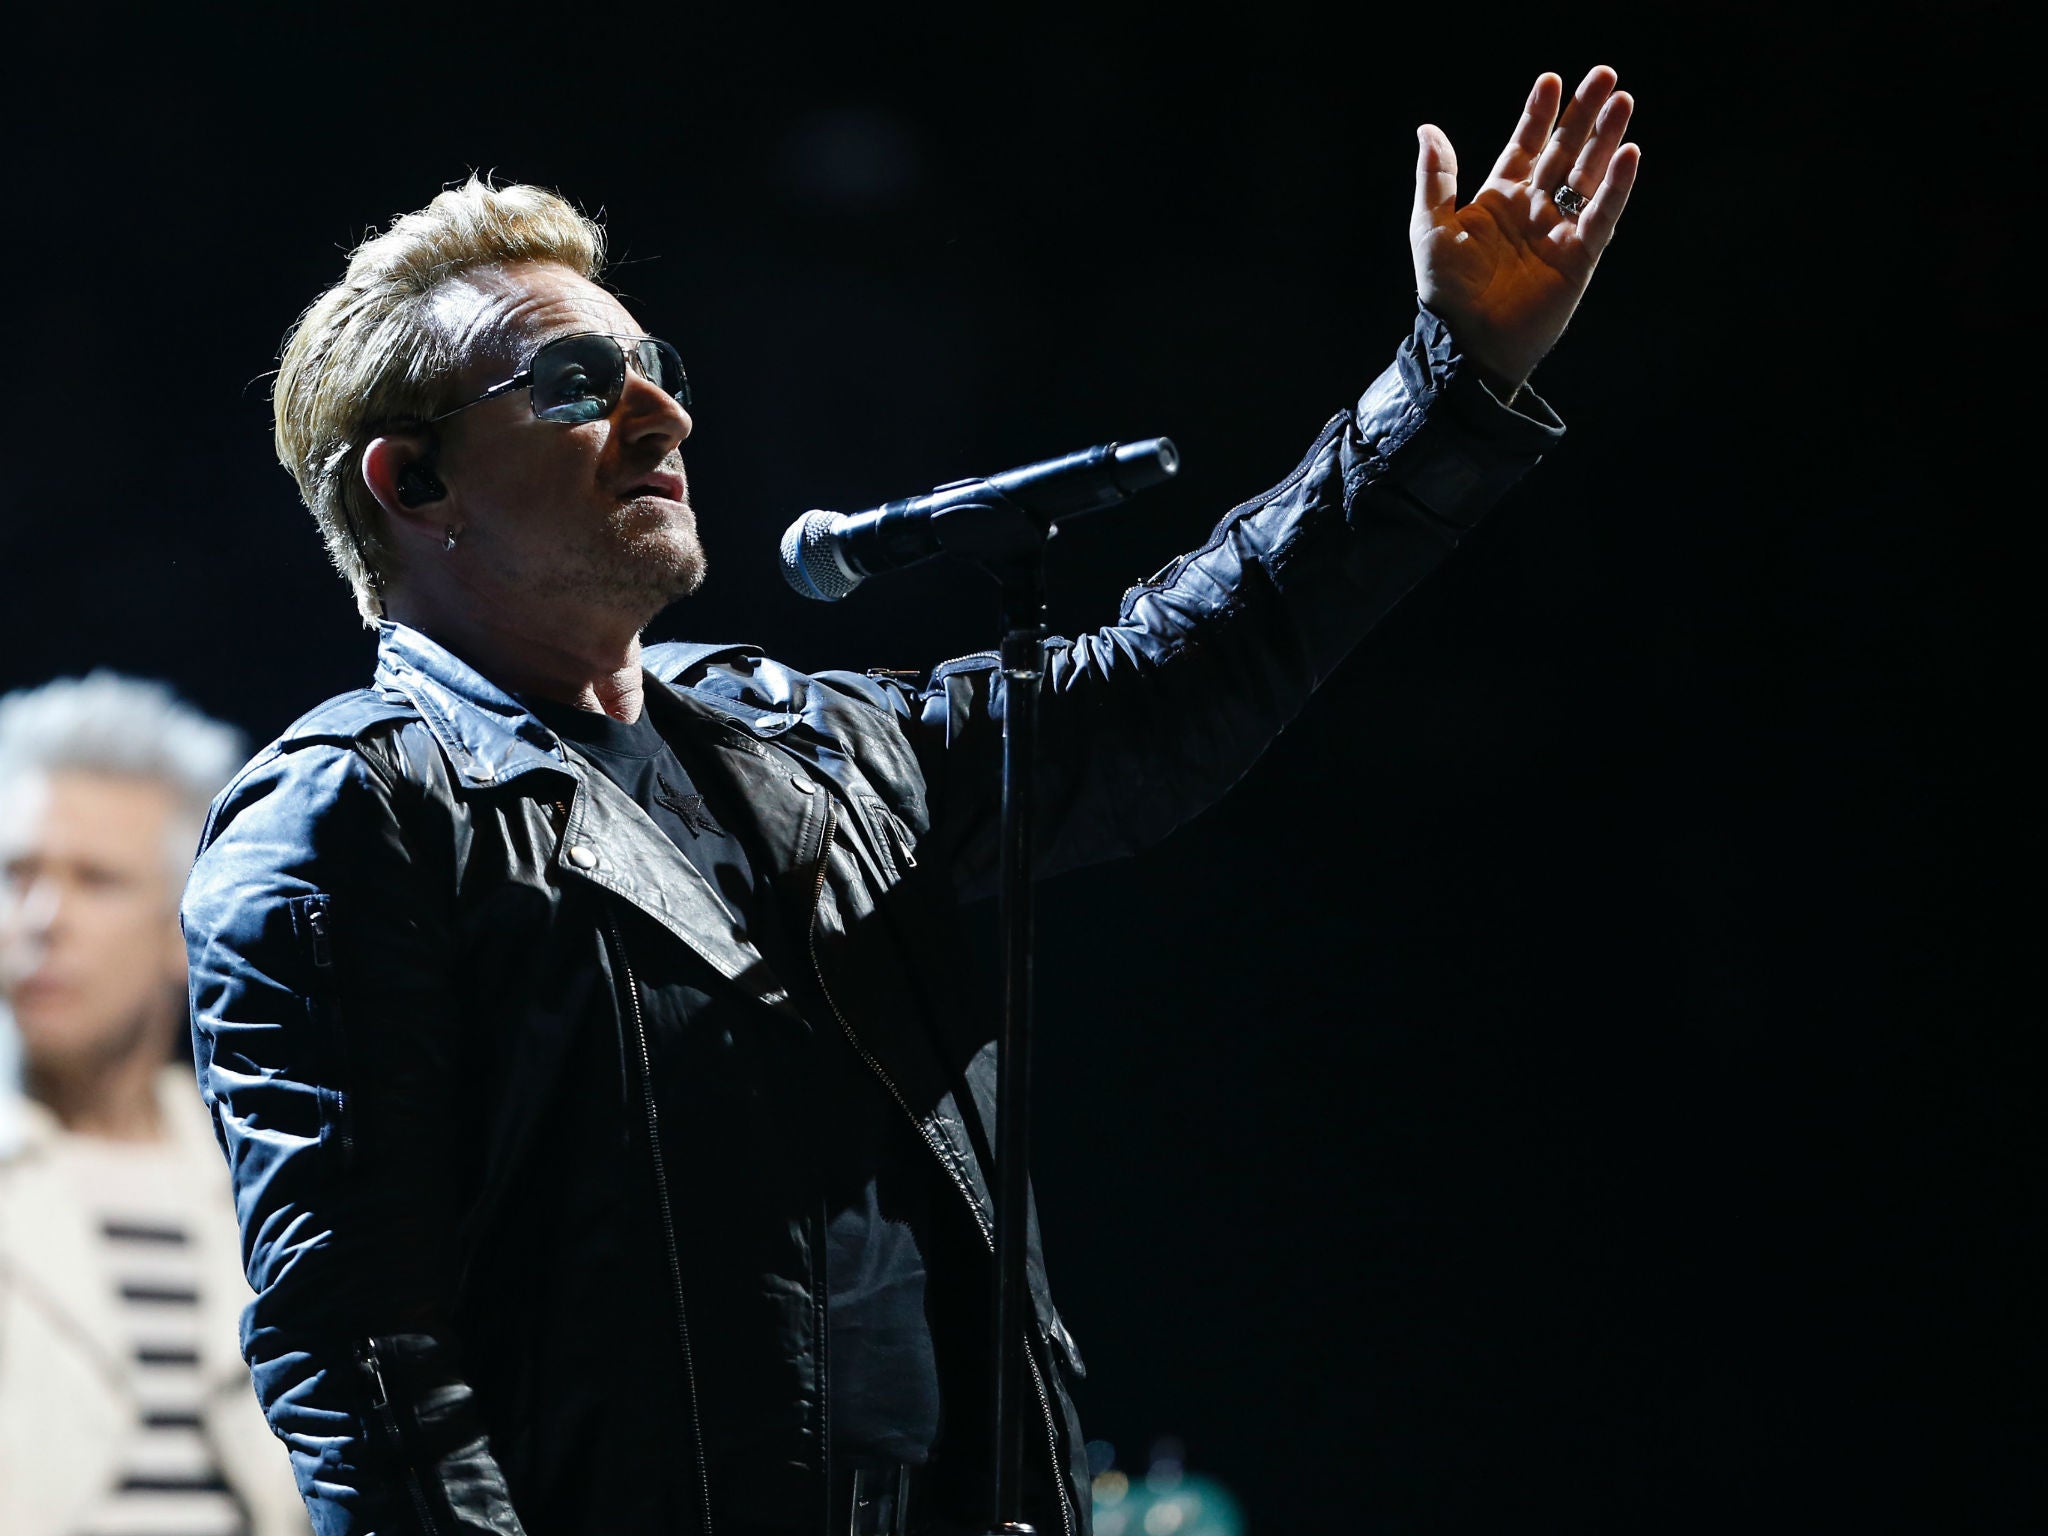 Bono performs with U2 in Paris on Sunday 6 December